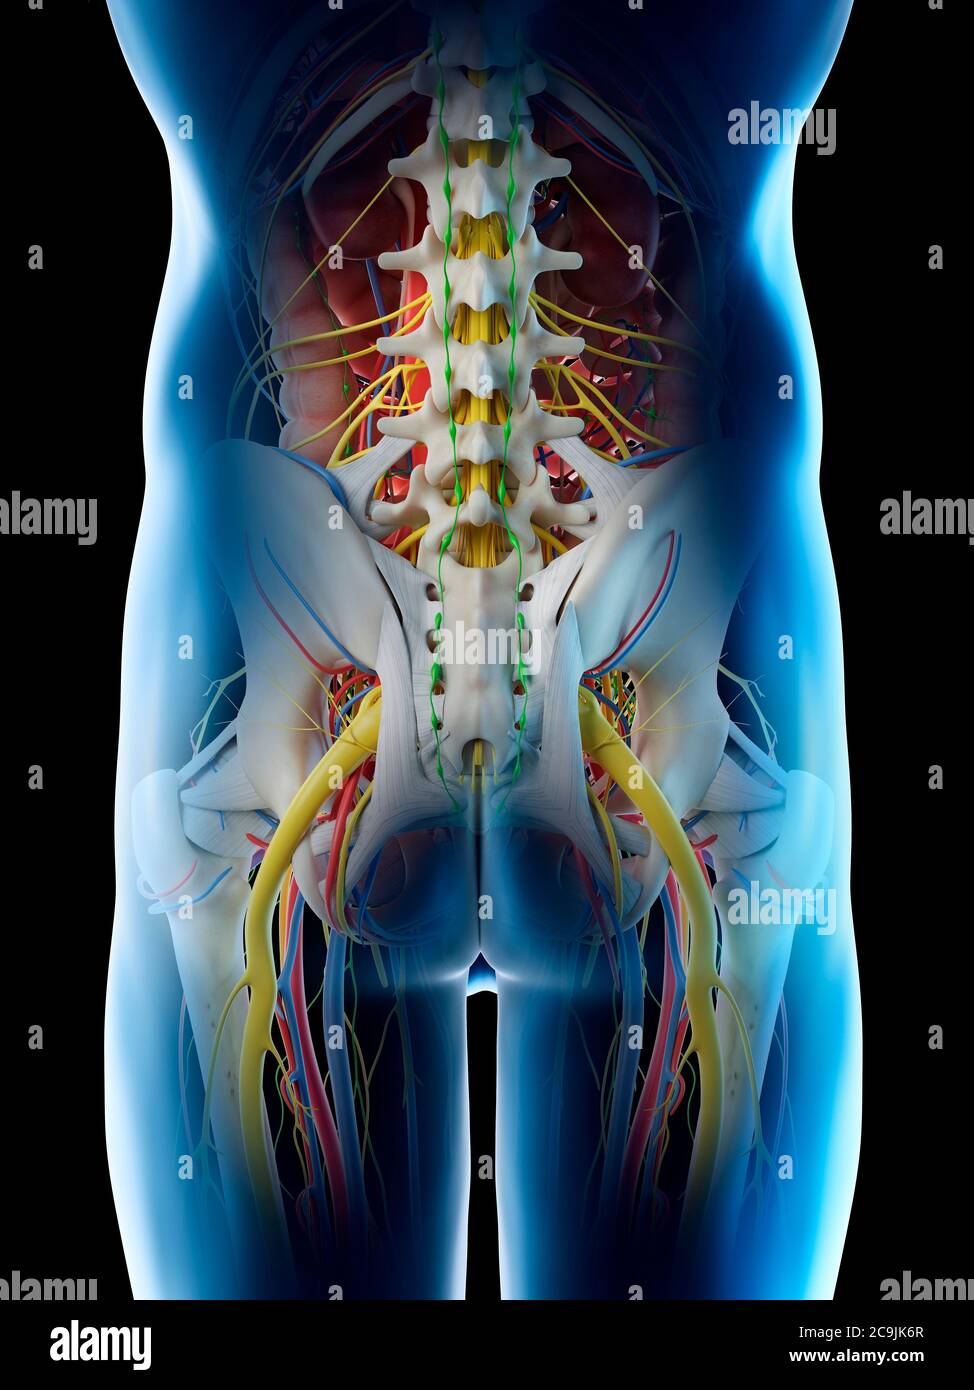 Male pelvis anatomy, computer illustration. Stock Photo